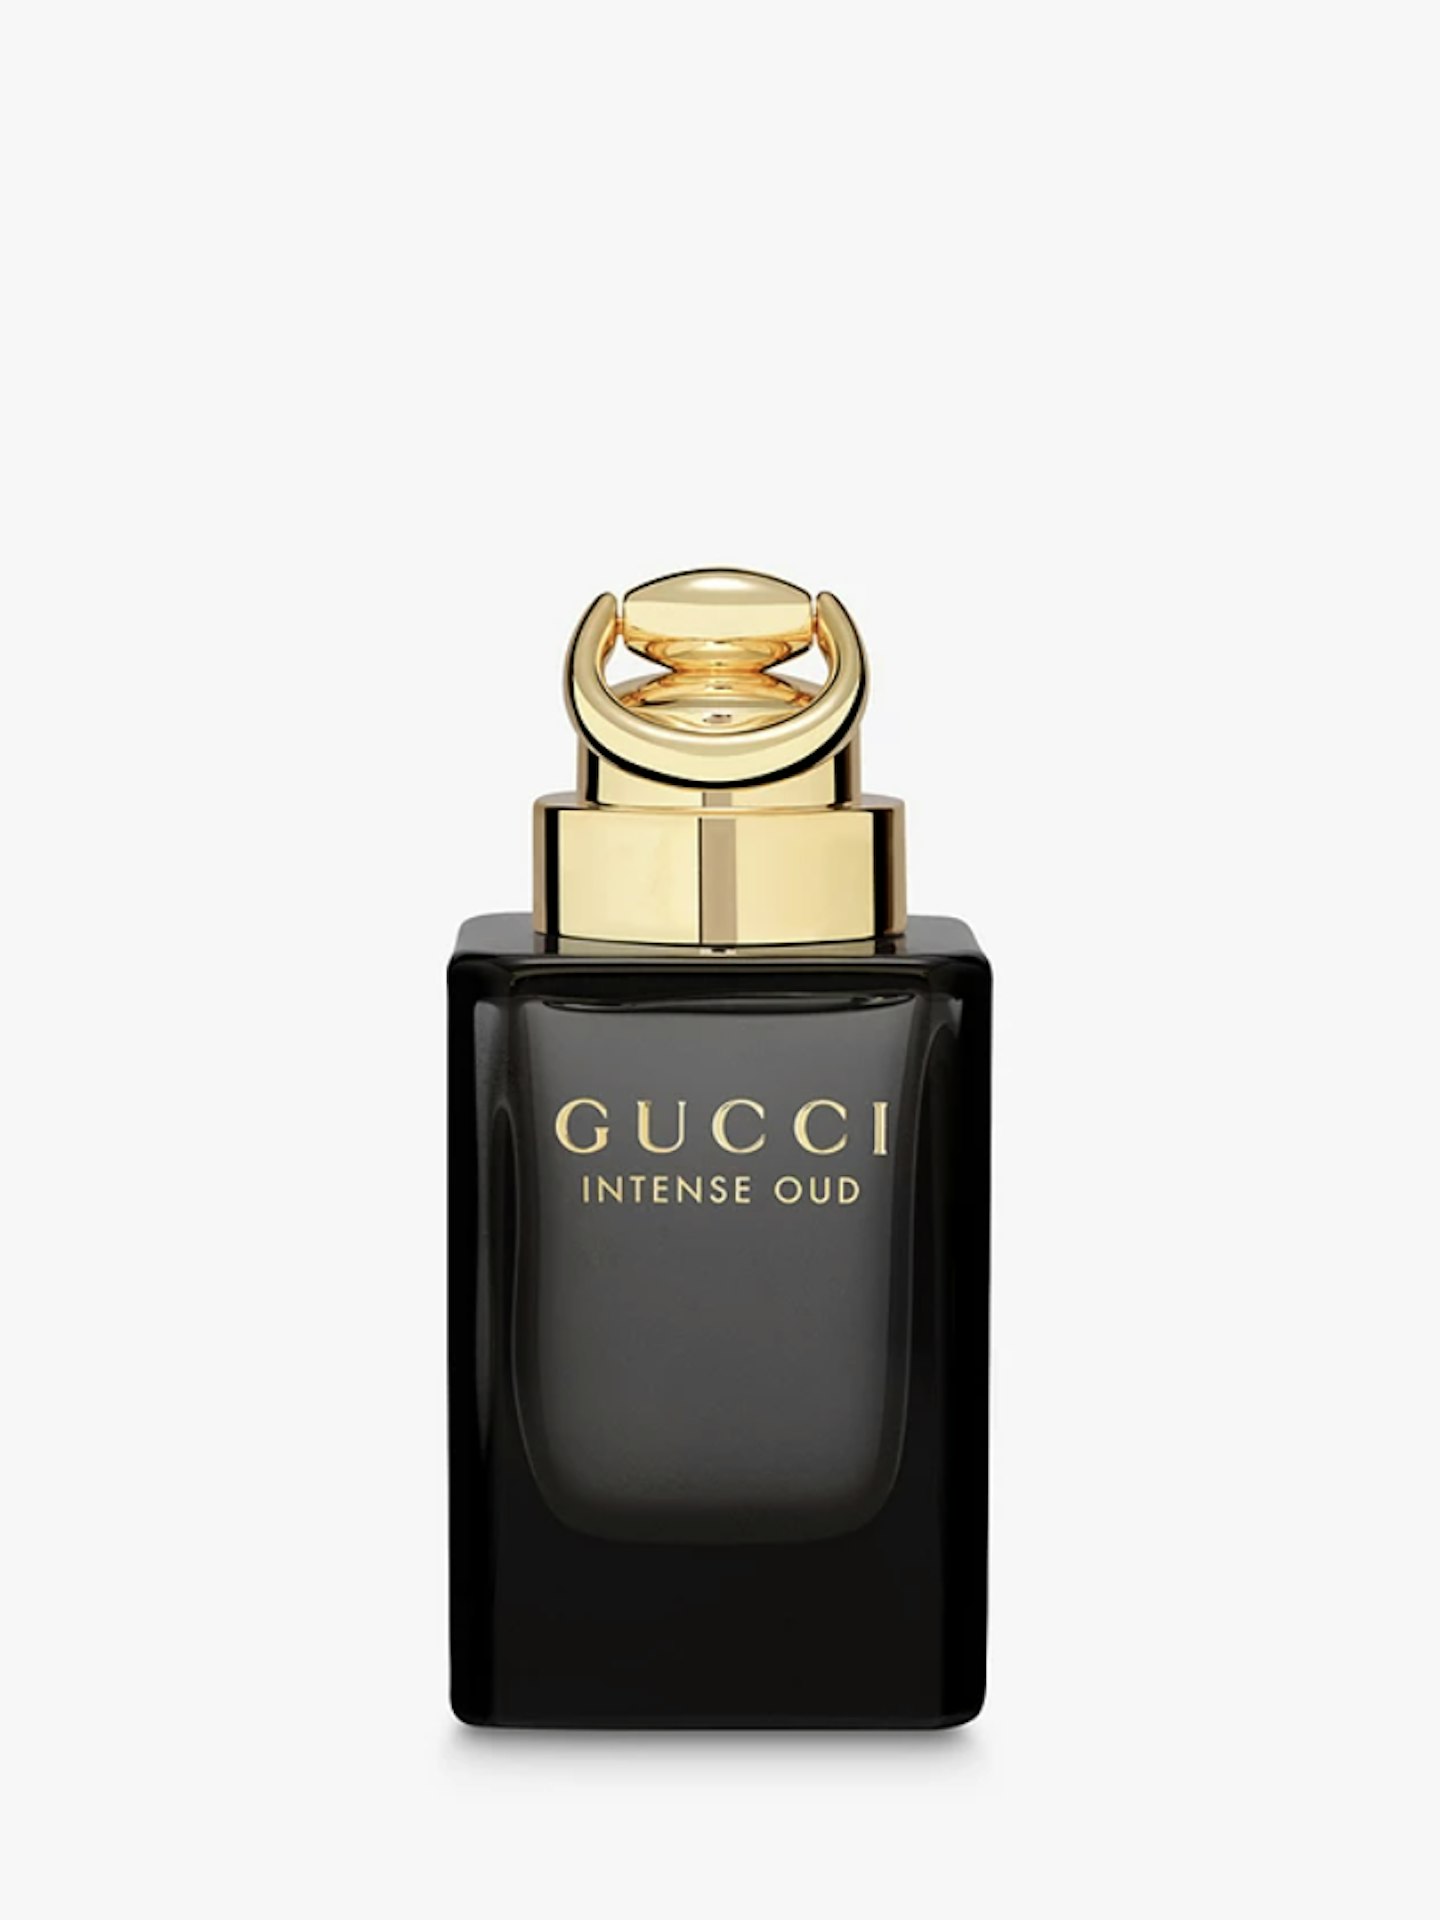 Gucci Oud Intense Eau de Parfum For Her and For Him